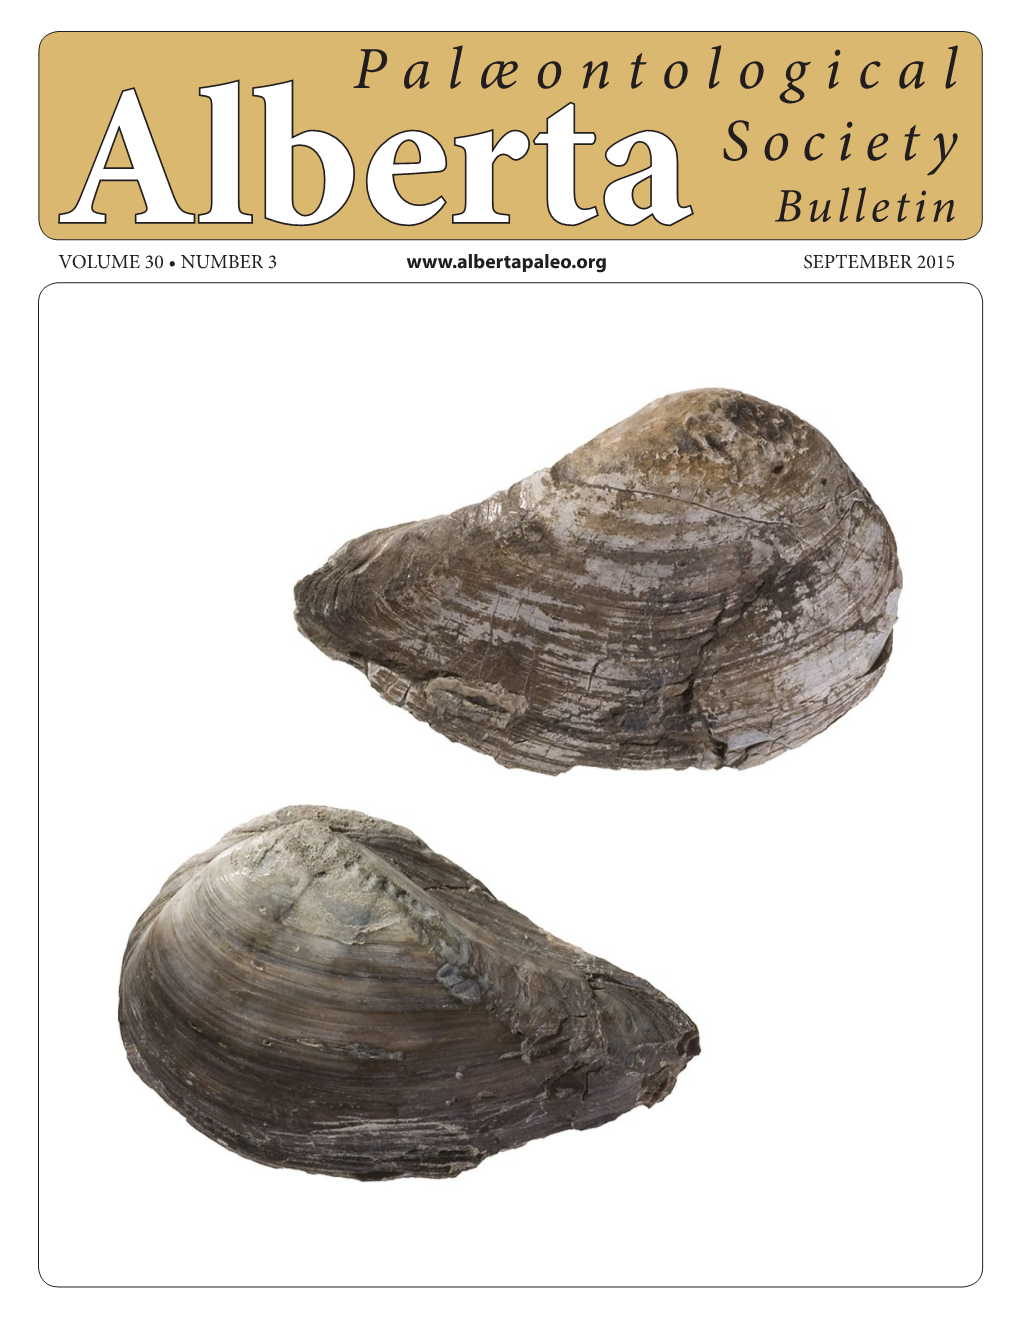 Alberta Palaeontological Society Bulletin, Vol. 30, No. 3, September